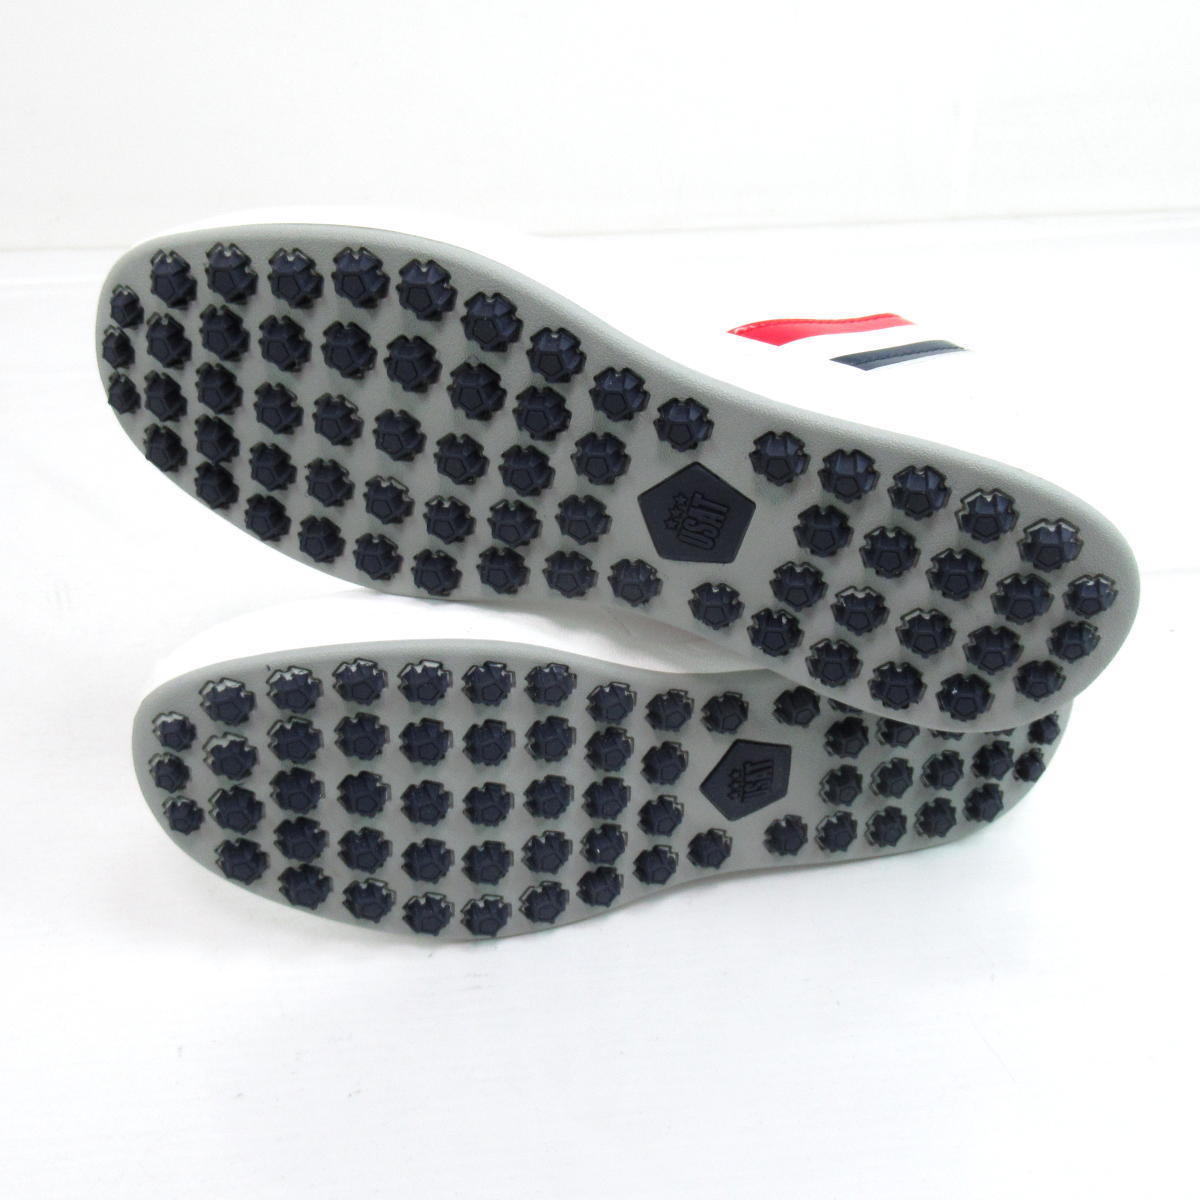 *US Athlete USSH-1770 spike less golf shoes white (26.5cm)* wide width 4E/ light weight design *